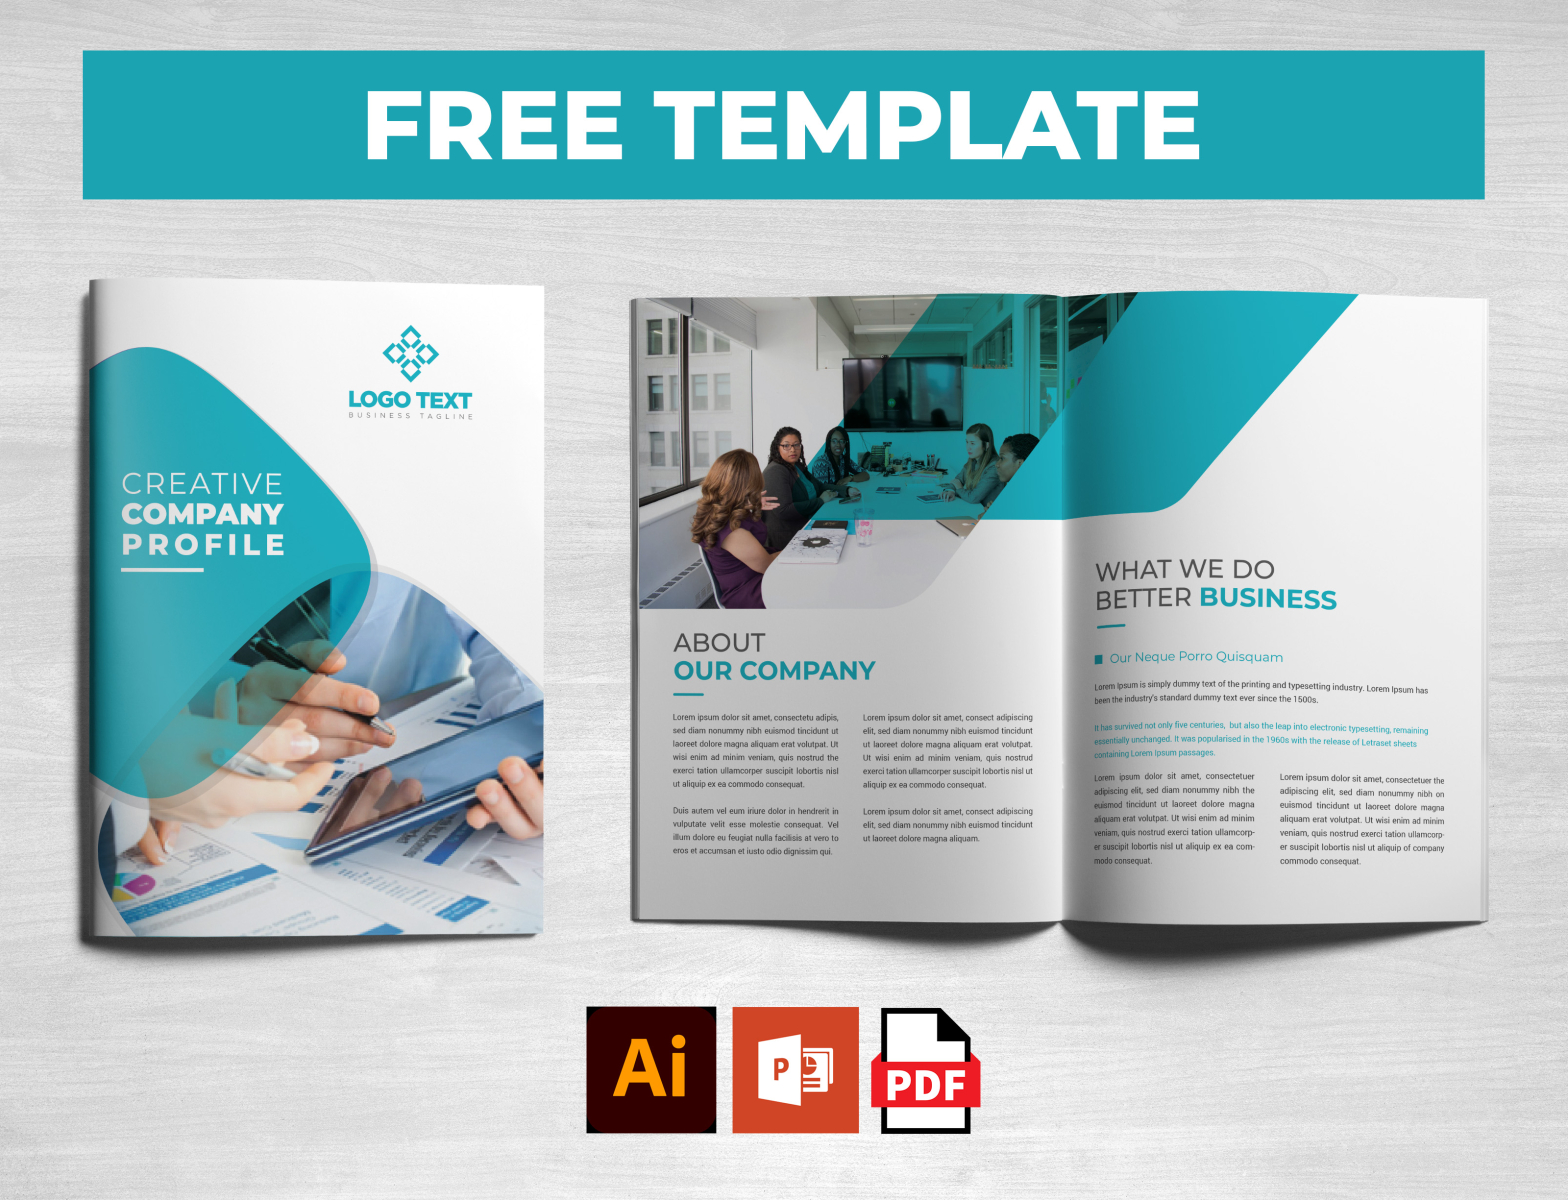 dribbble-cover-of-company-profile-design-free-template-download-jpg-by-anik-paul-joyraj